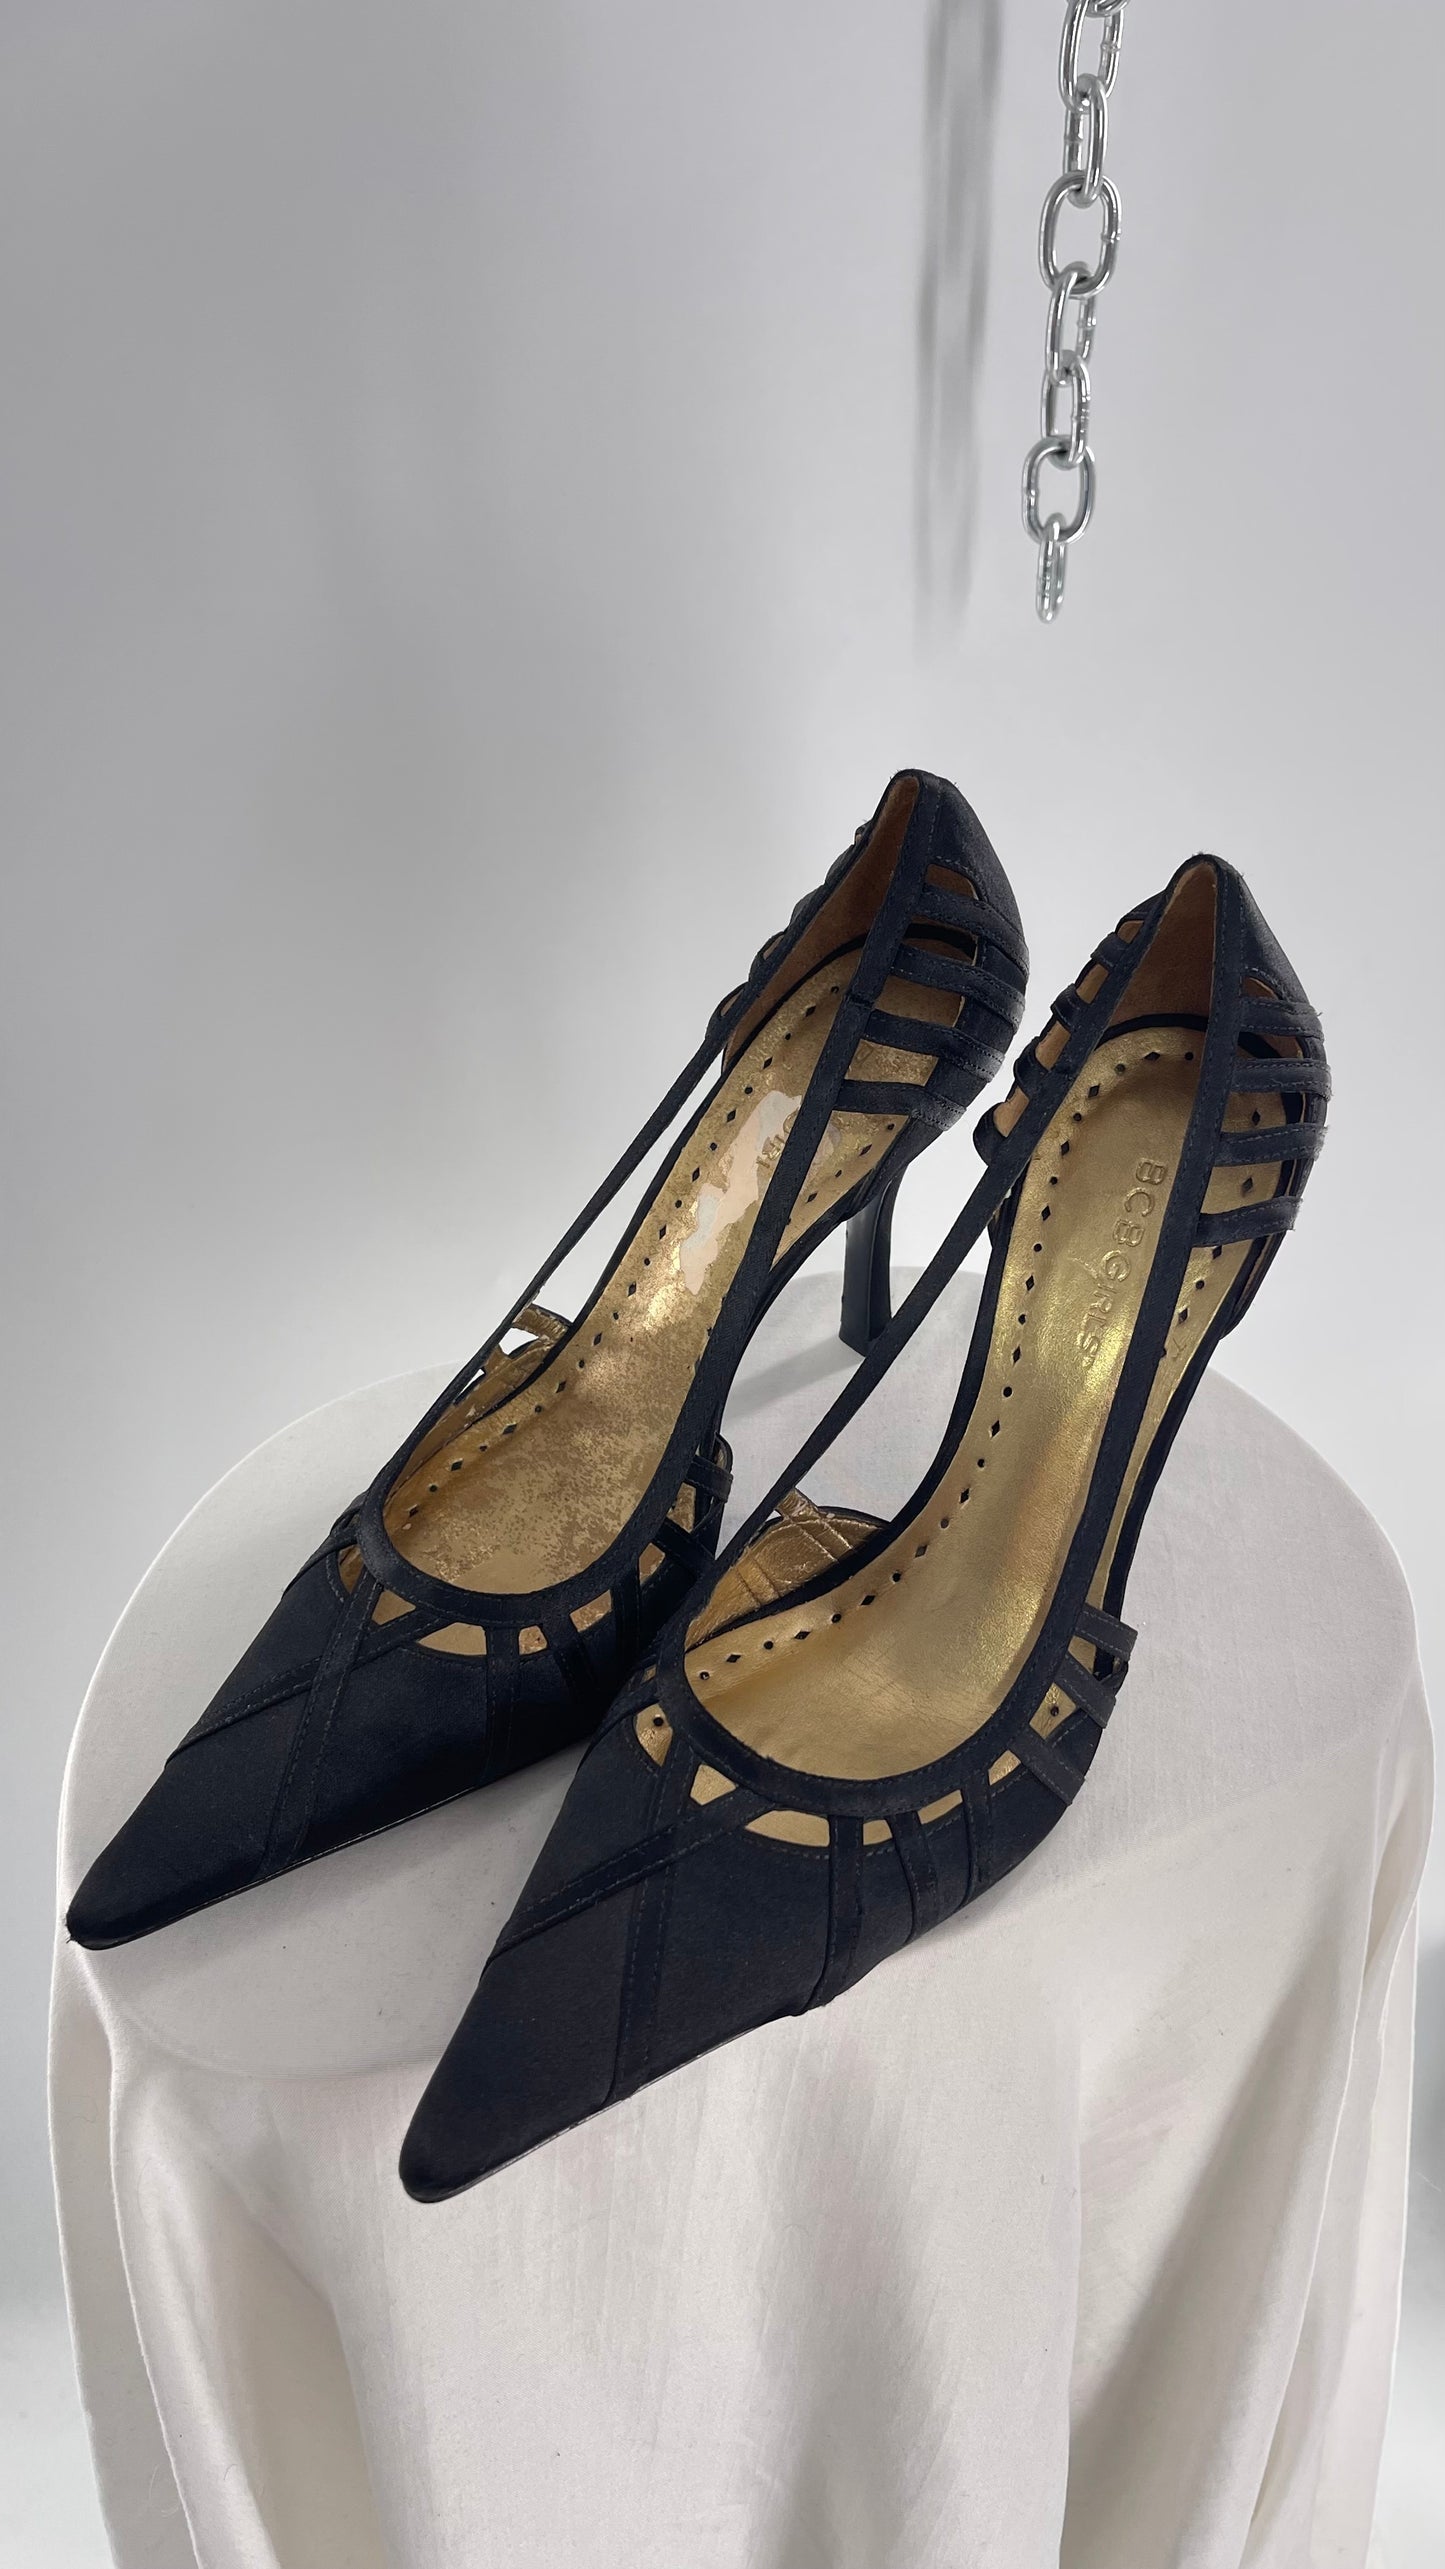 Vintage BCBGirls Black Satin Pointed Toe Heel with Strap Detailing (9.5)